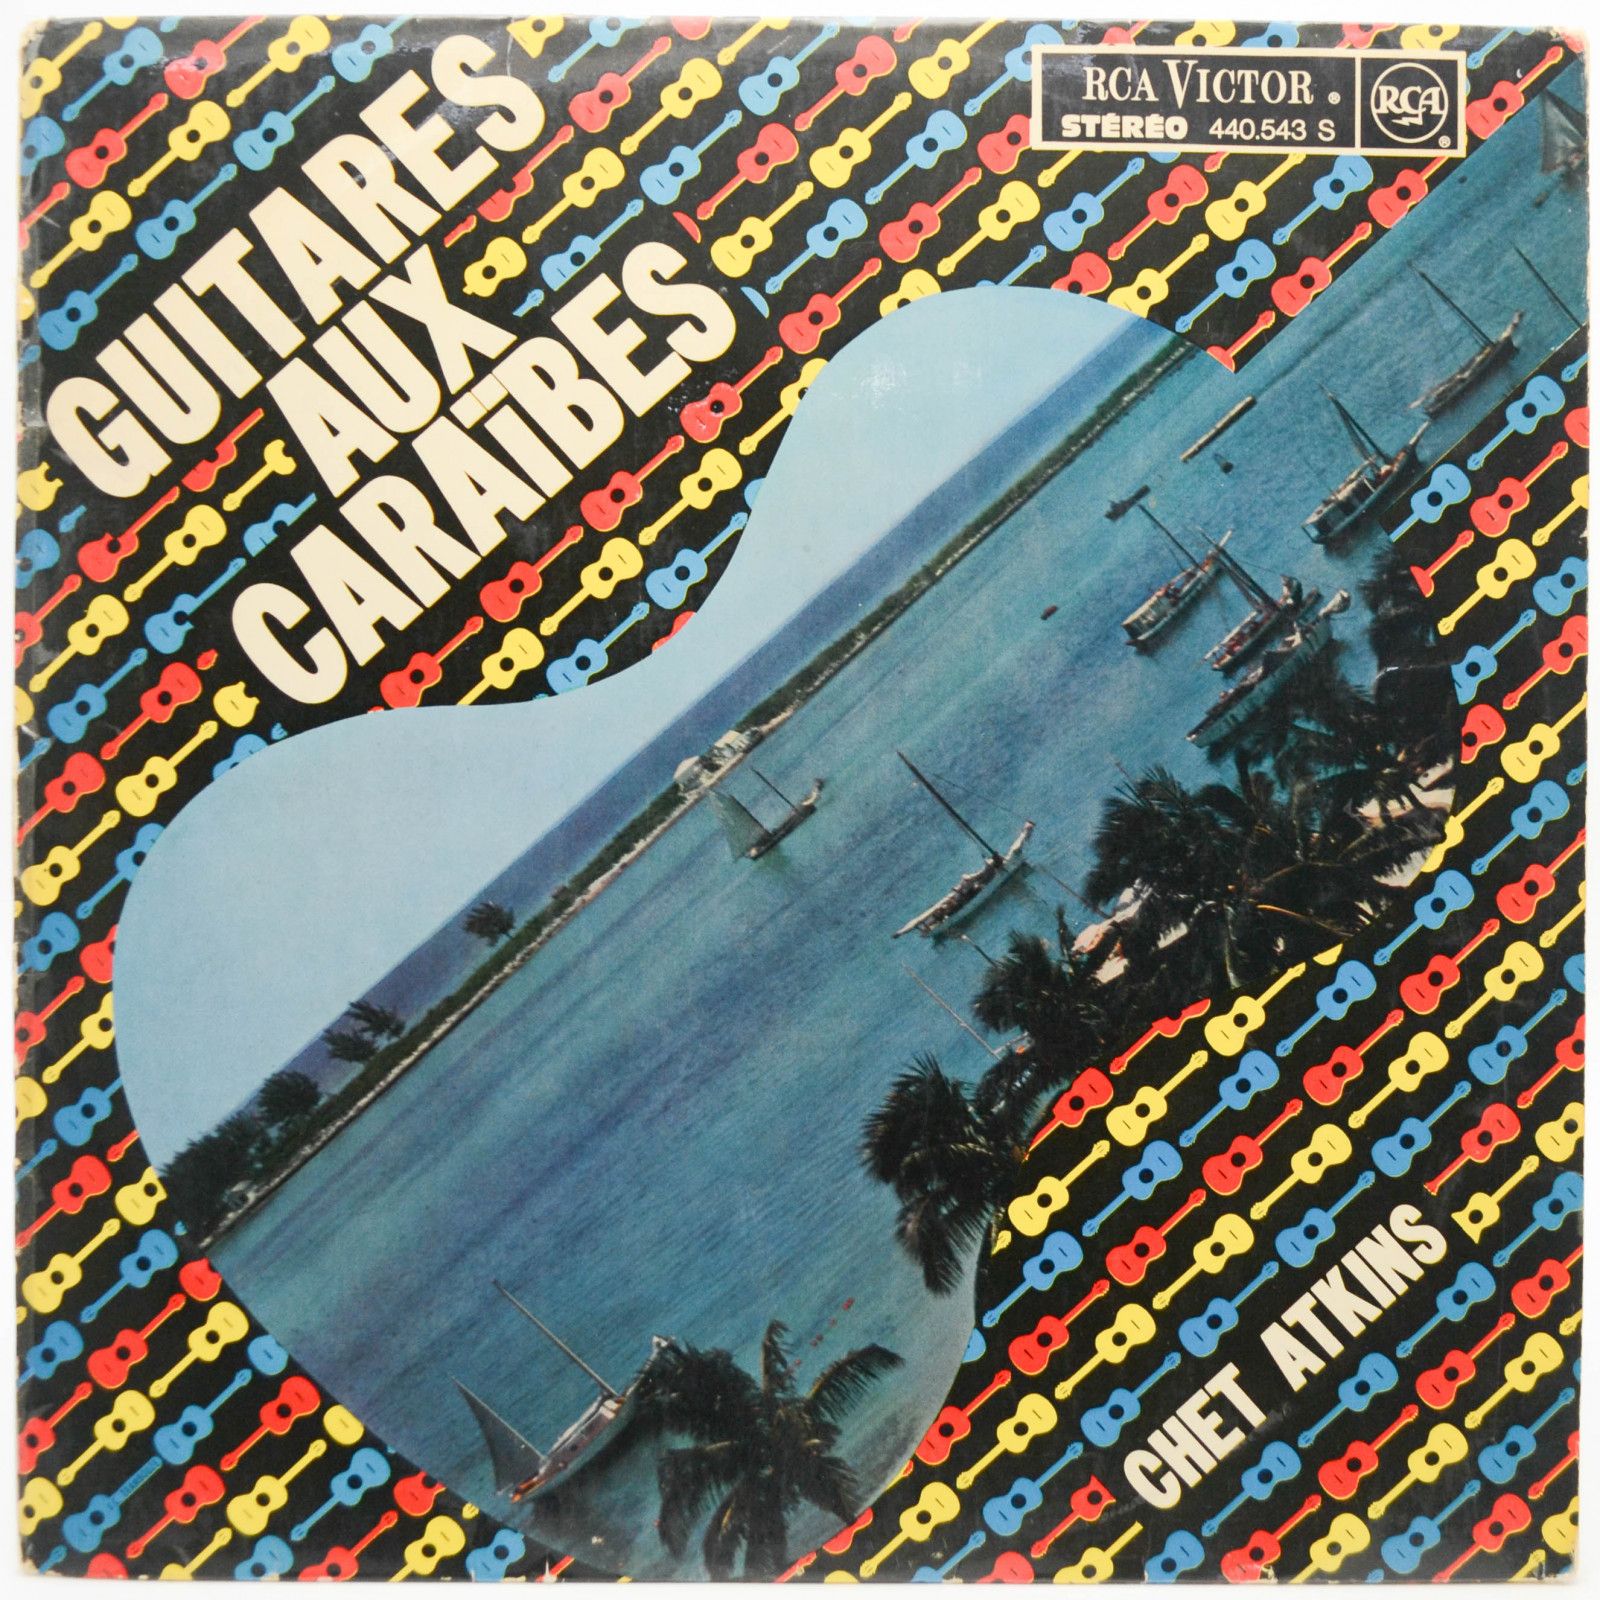 Chet Atkins — Guitares Aux Caraïbes, 1963